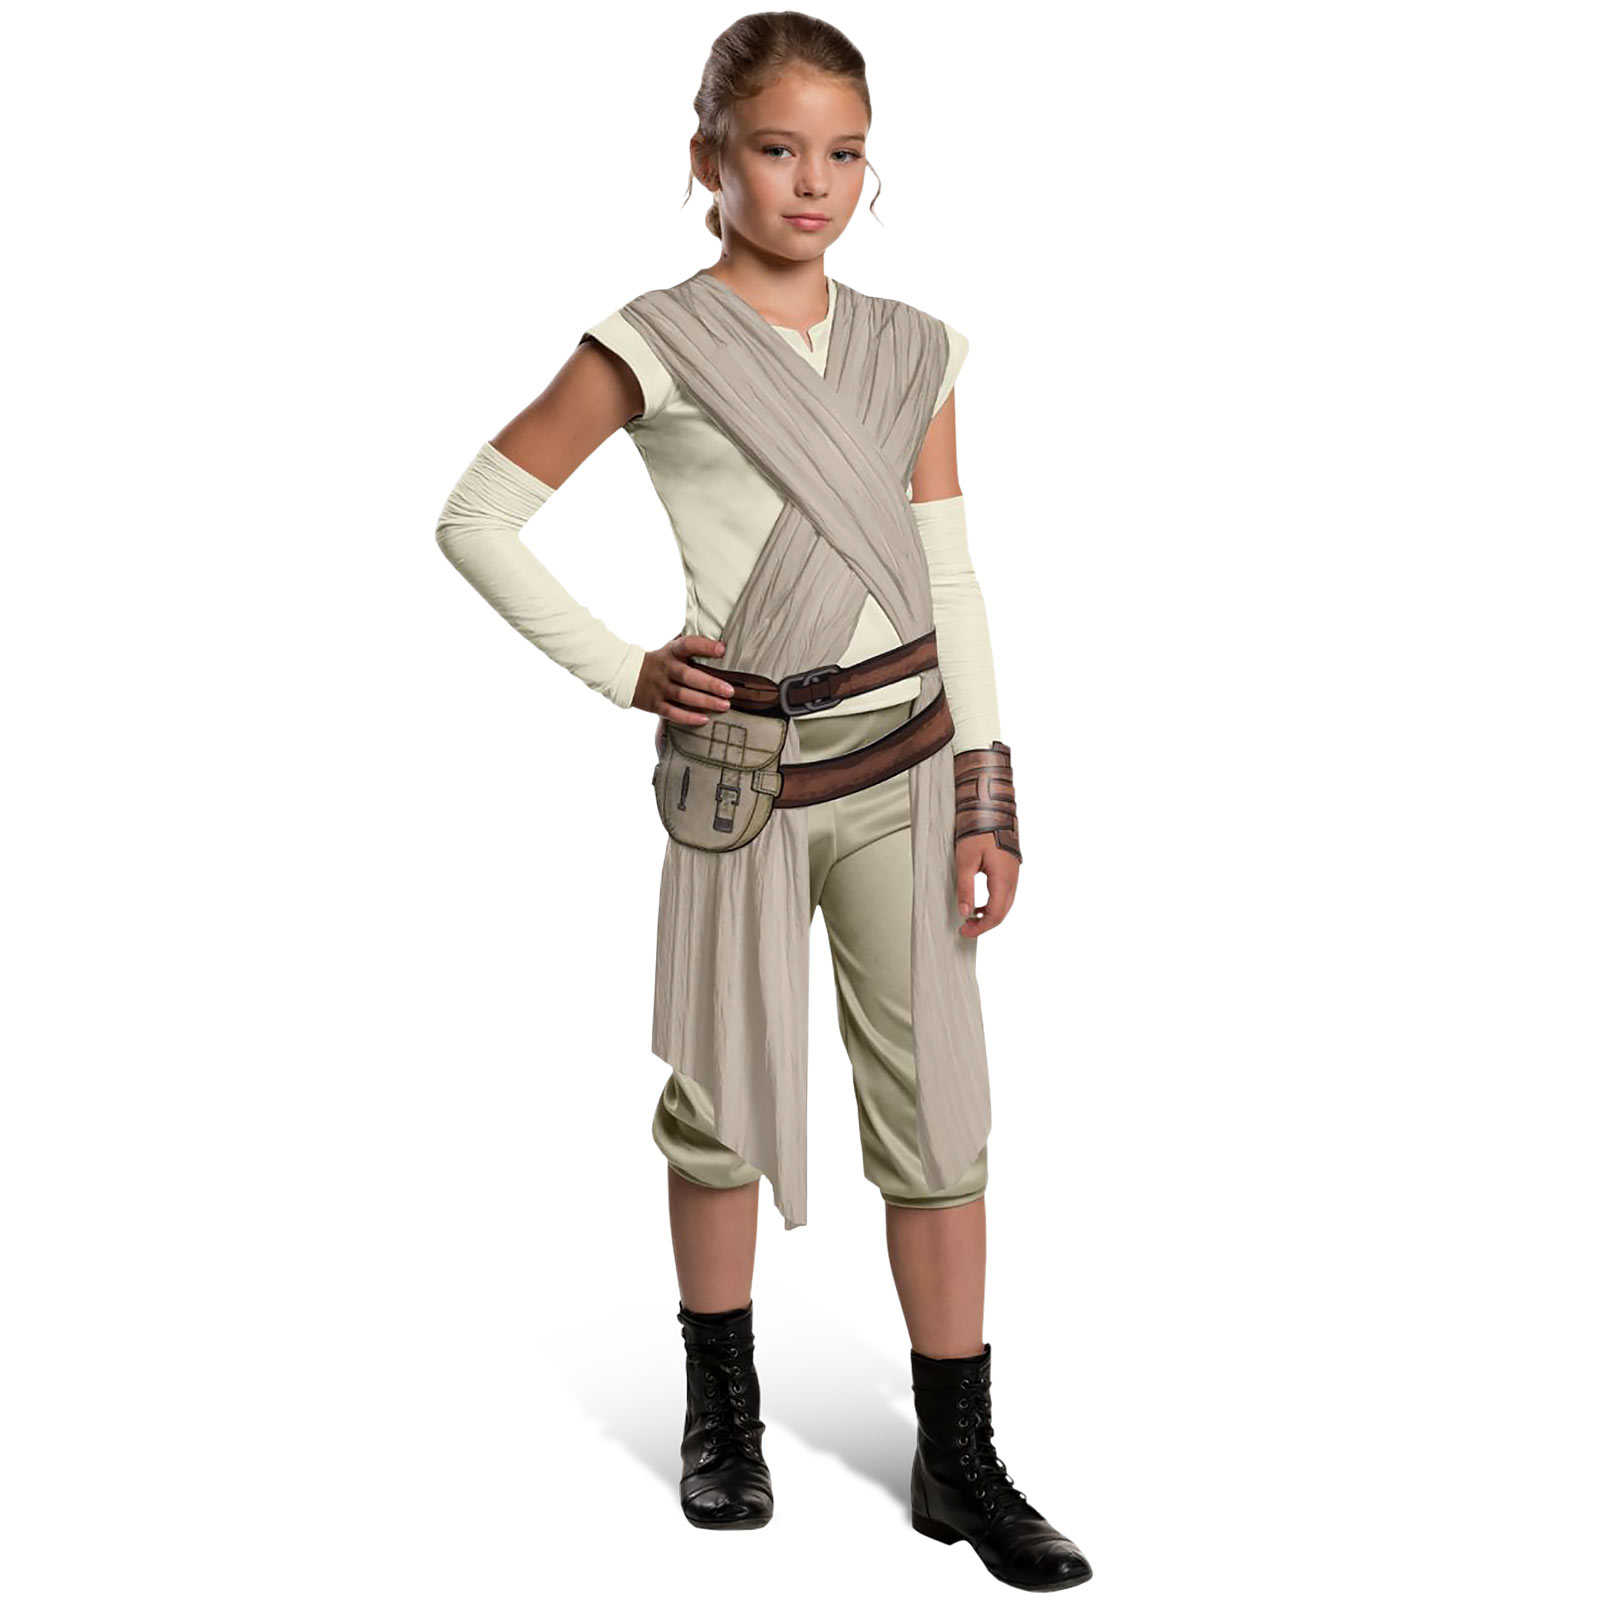 Star Wars - Rey Kostüm Kinder deluxe